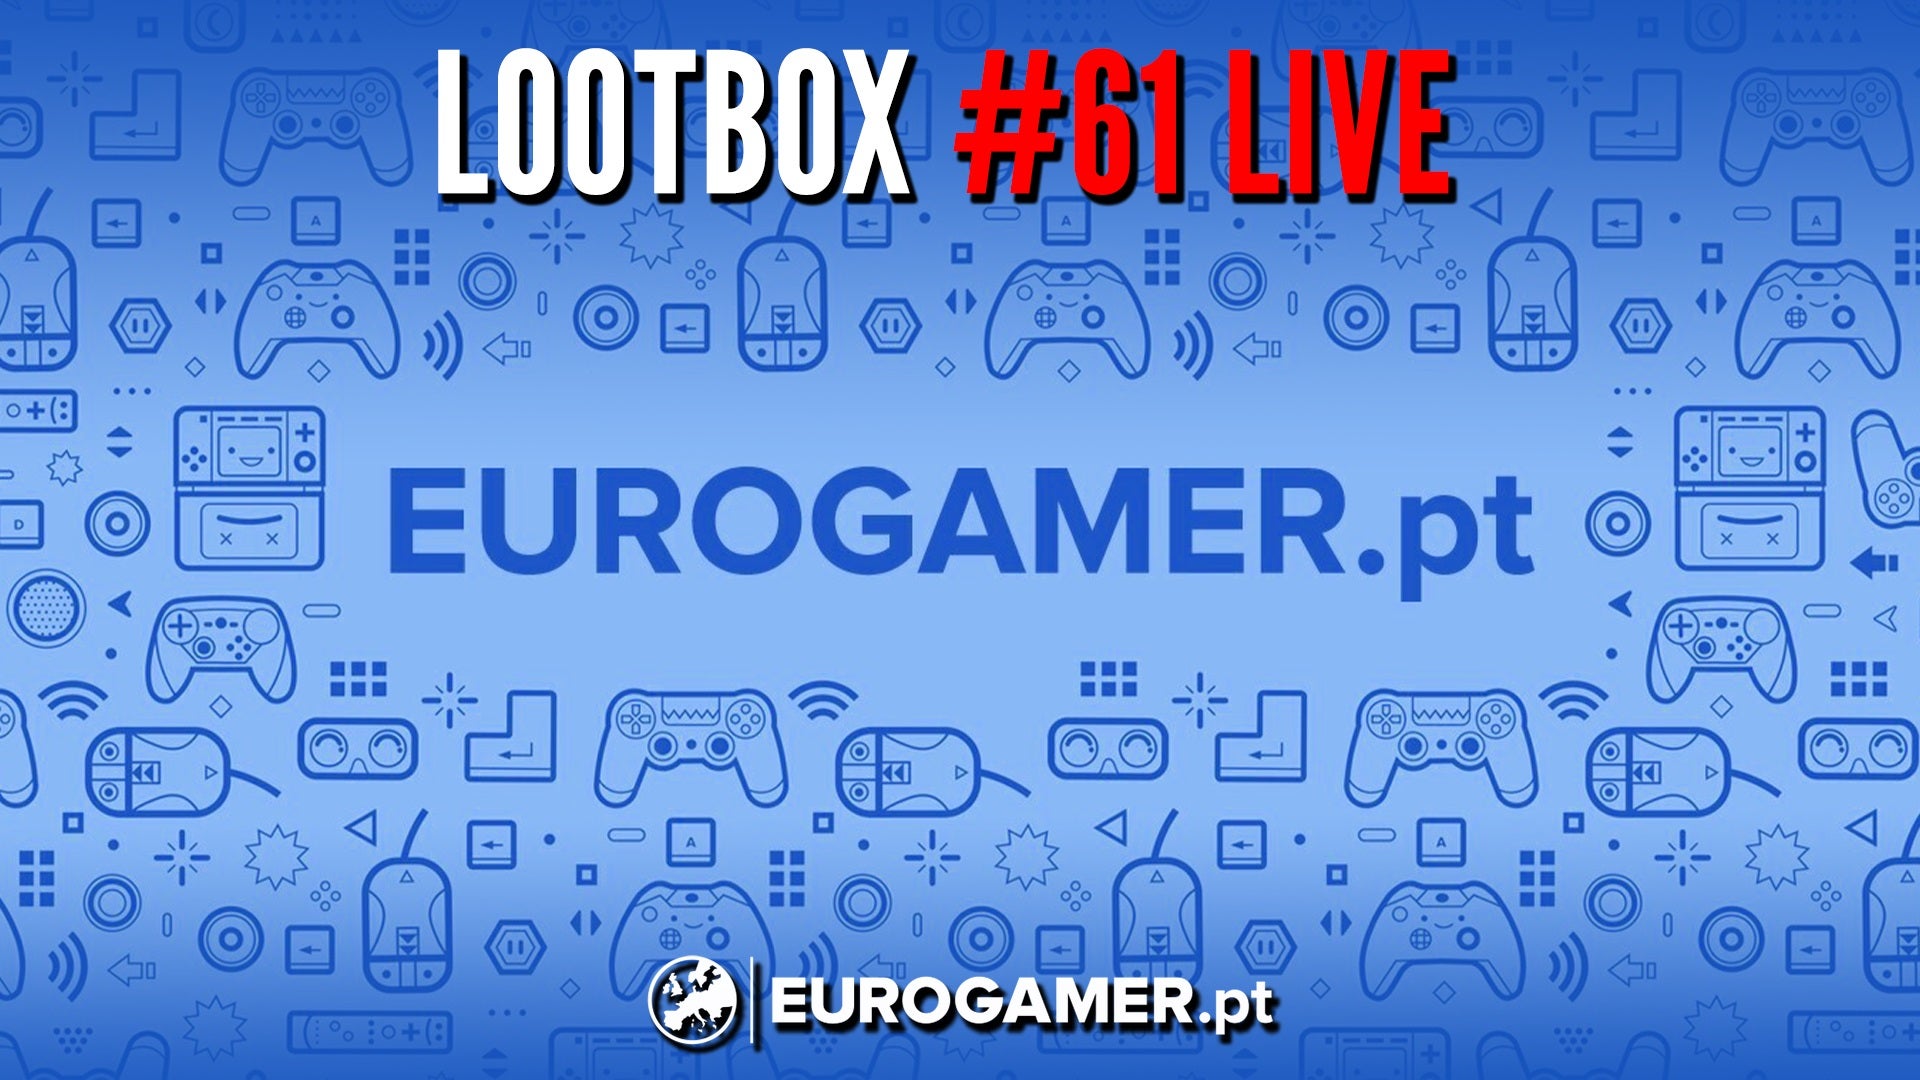 Imagem para Lootbox #61 LIVE - Headsets e monitores Sony, Need for Speed, God of War Ragnarök, Skate 4...